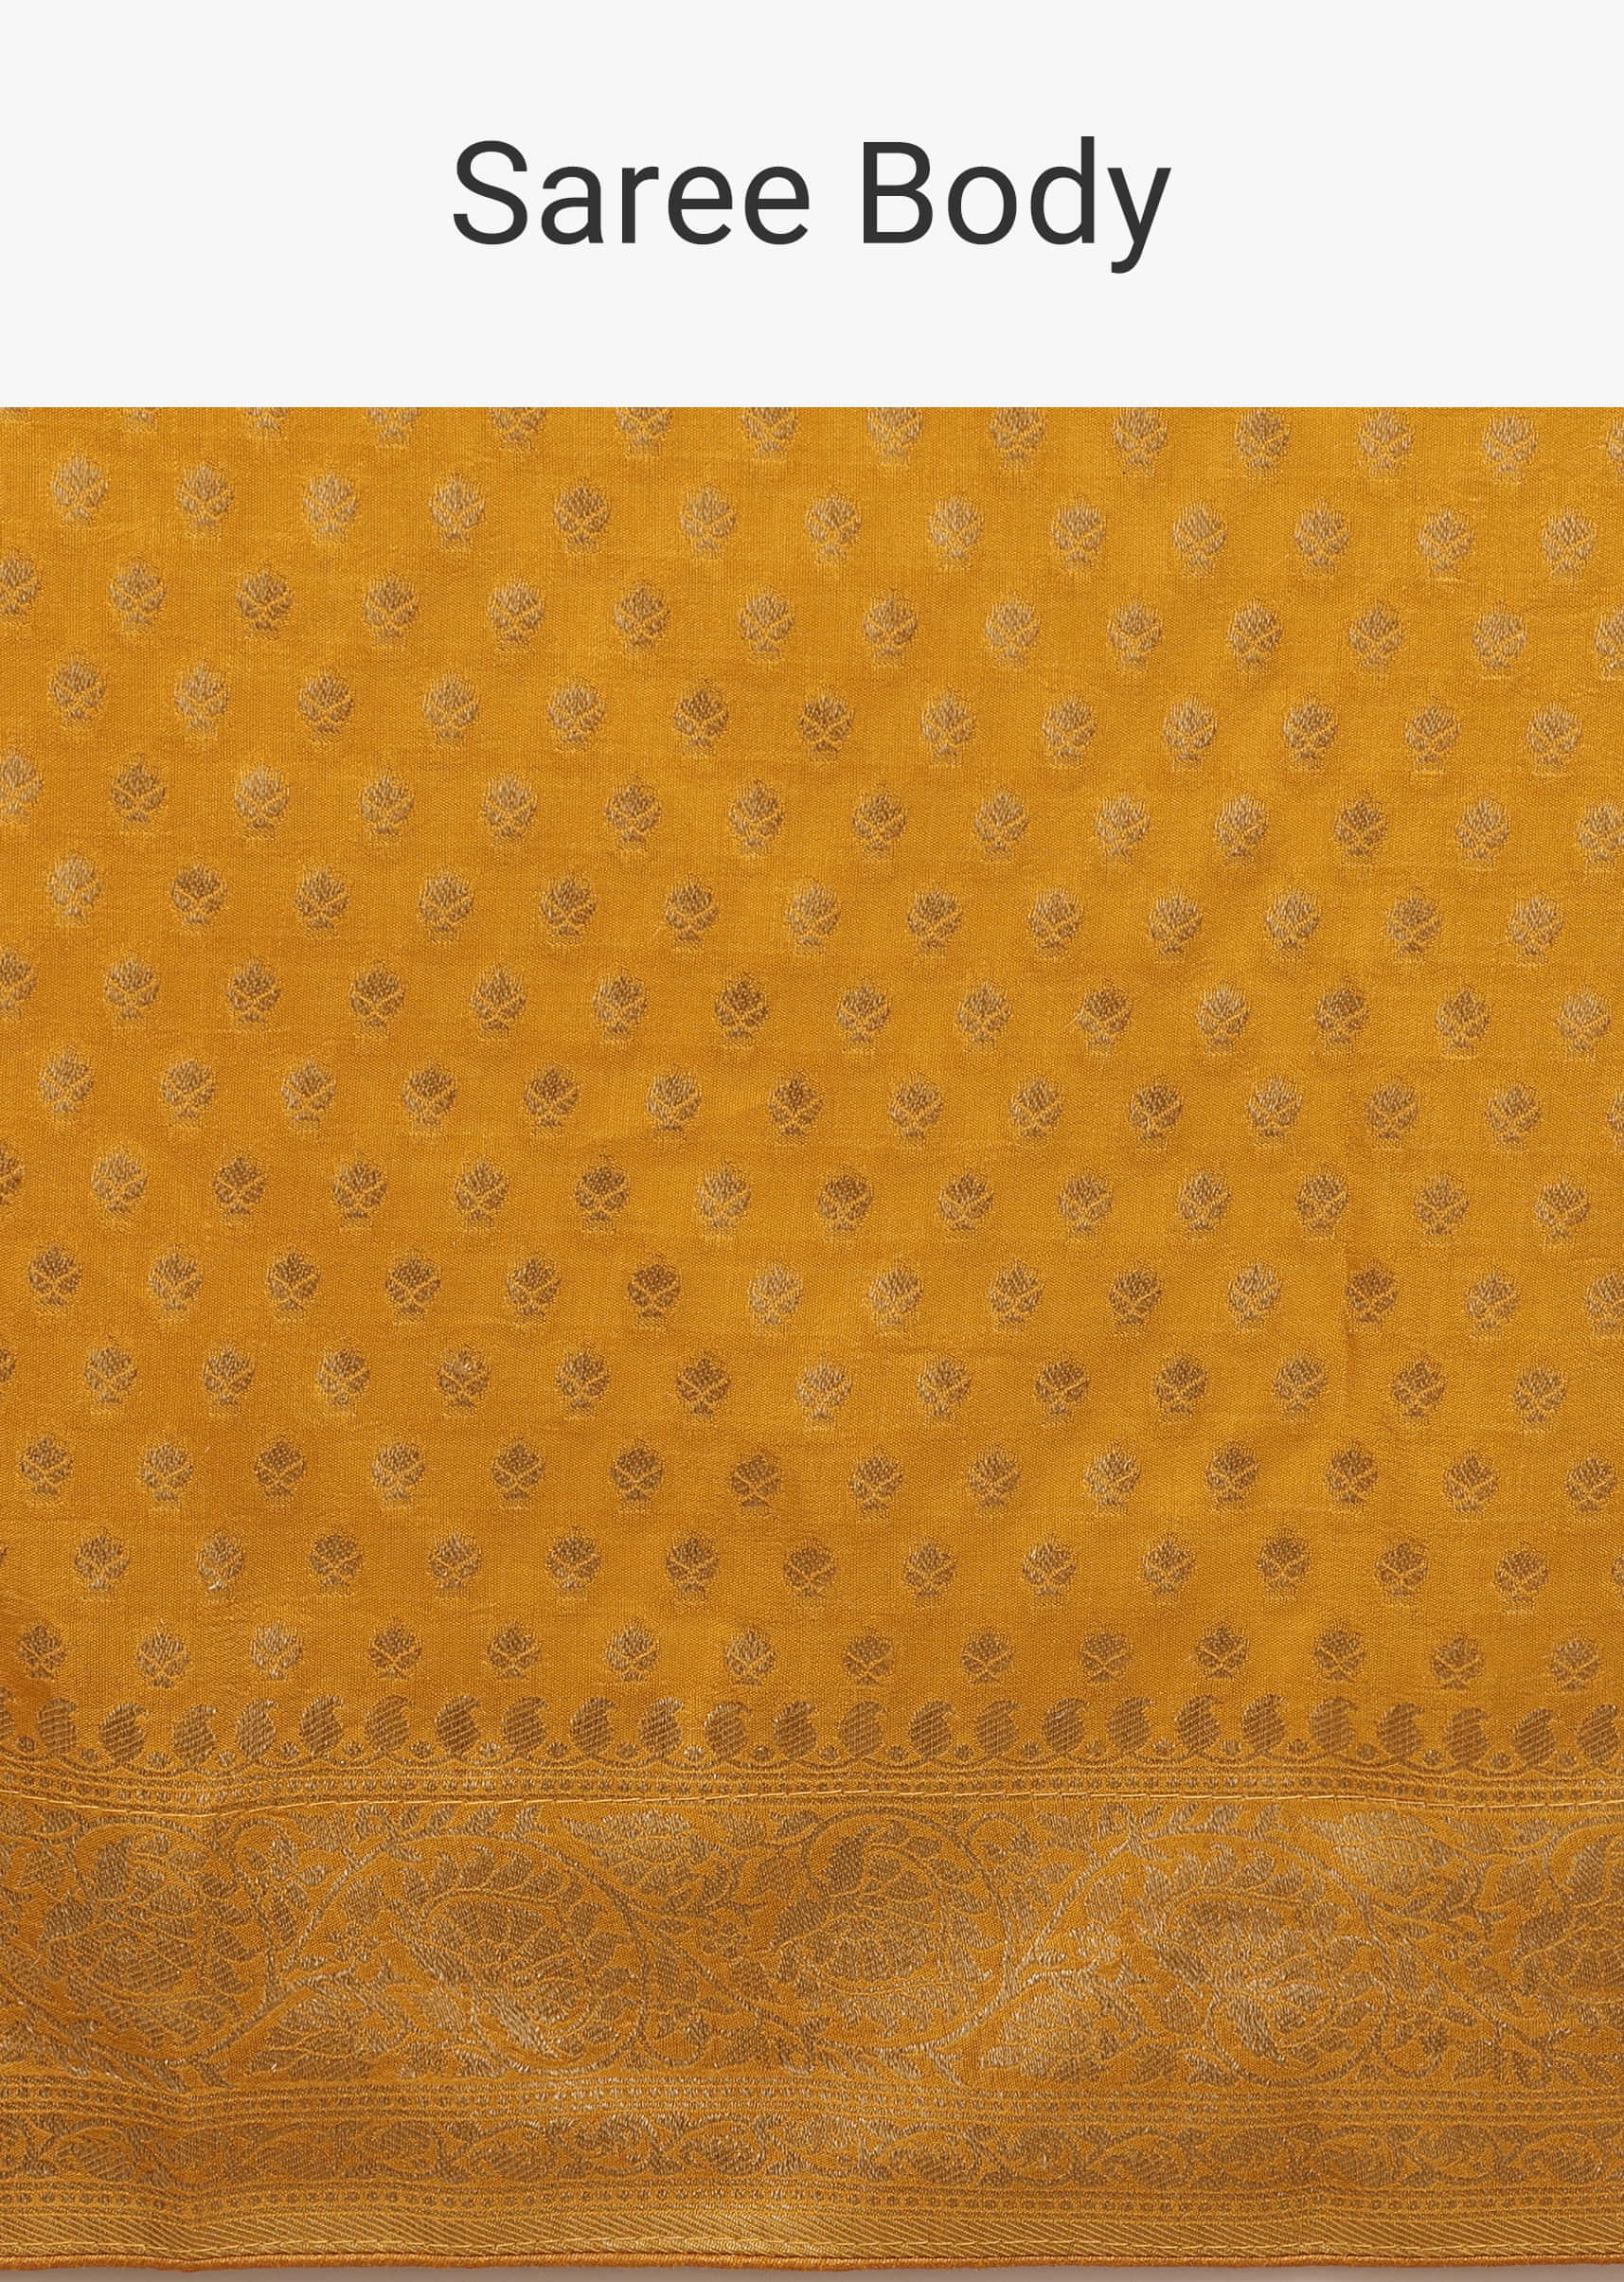 Mustard Yellow Saree In Dola Silk With Woven Buttis And Geometric Moroccan Work On Pallu